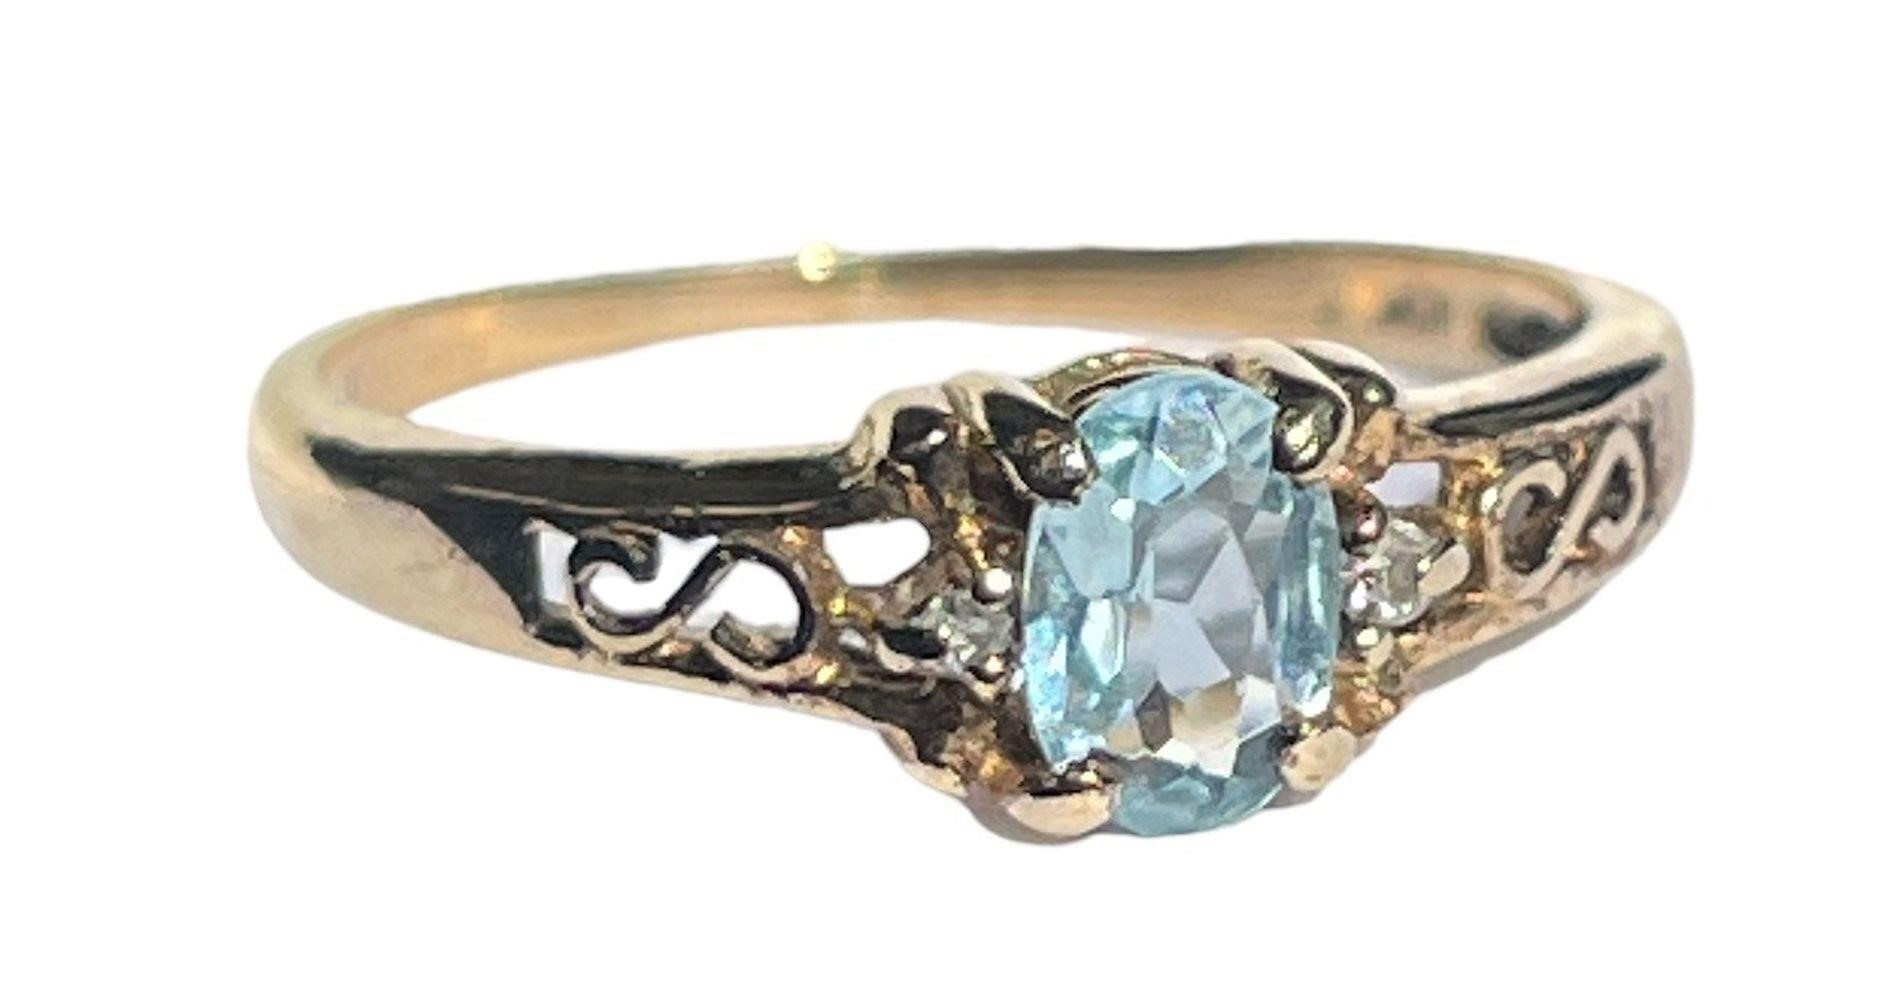 Vintage 14k Gold, Aquamarine, Diamond Ring